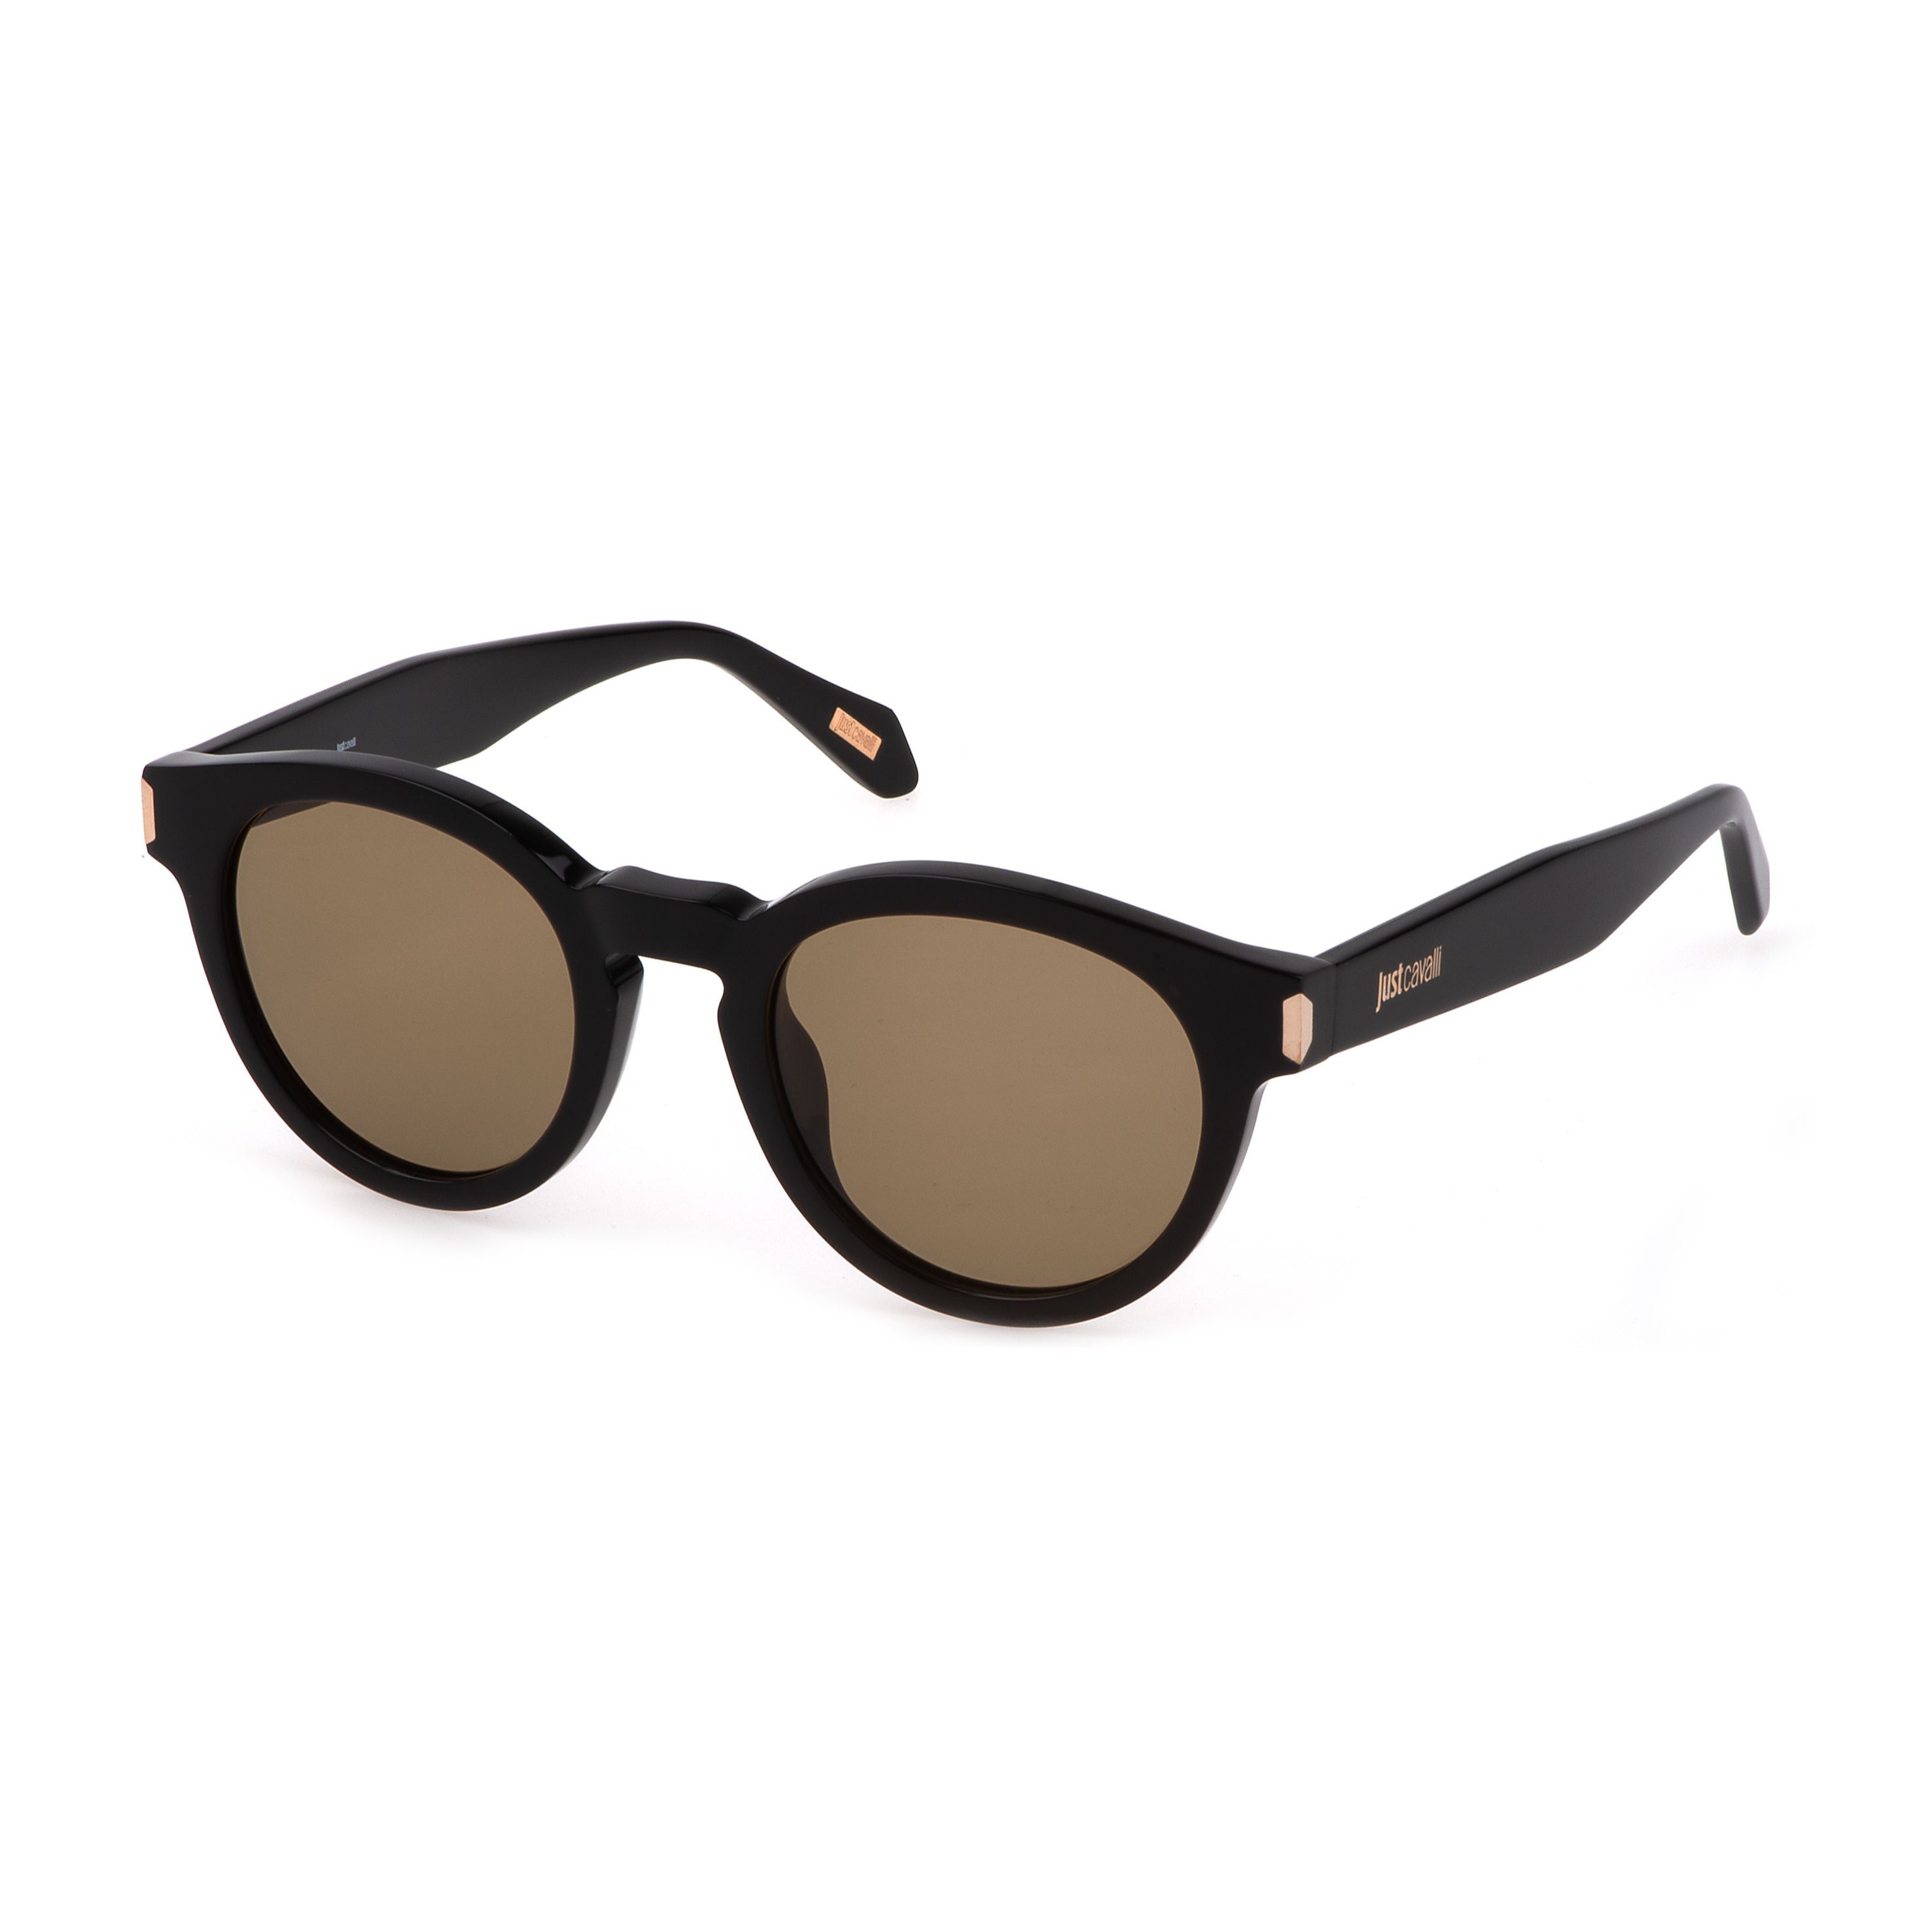 SJC025 Panthos Sunglasses 700 - size 50